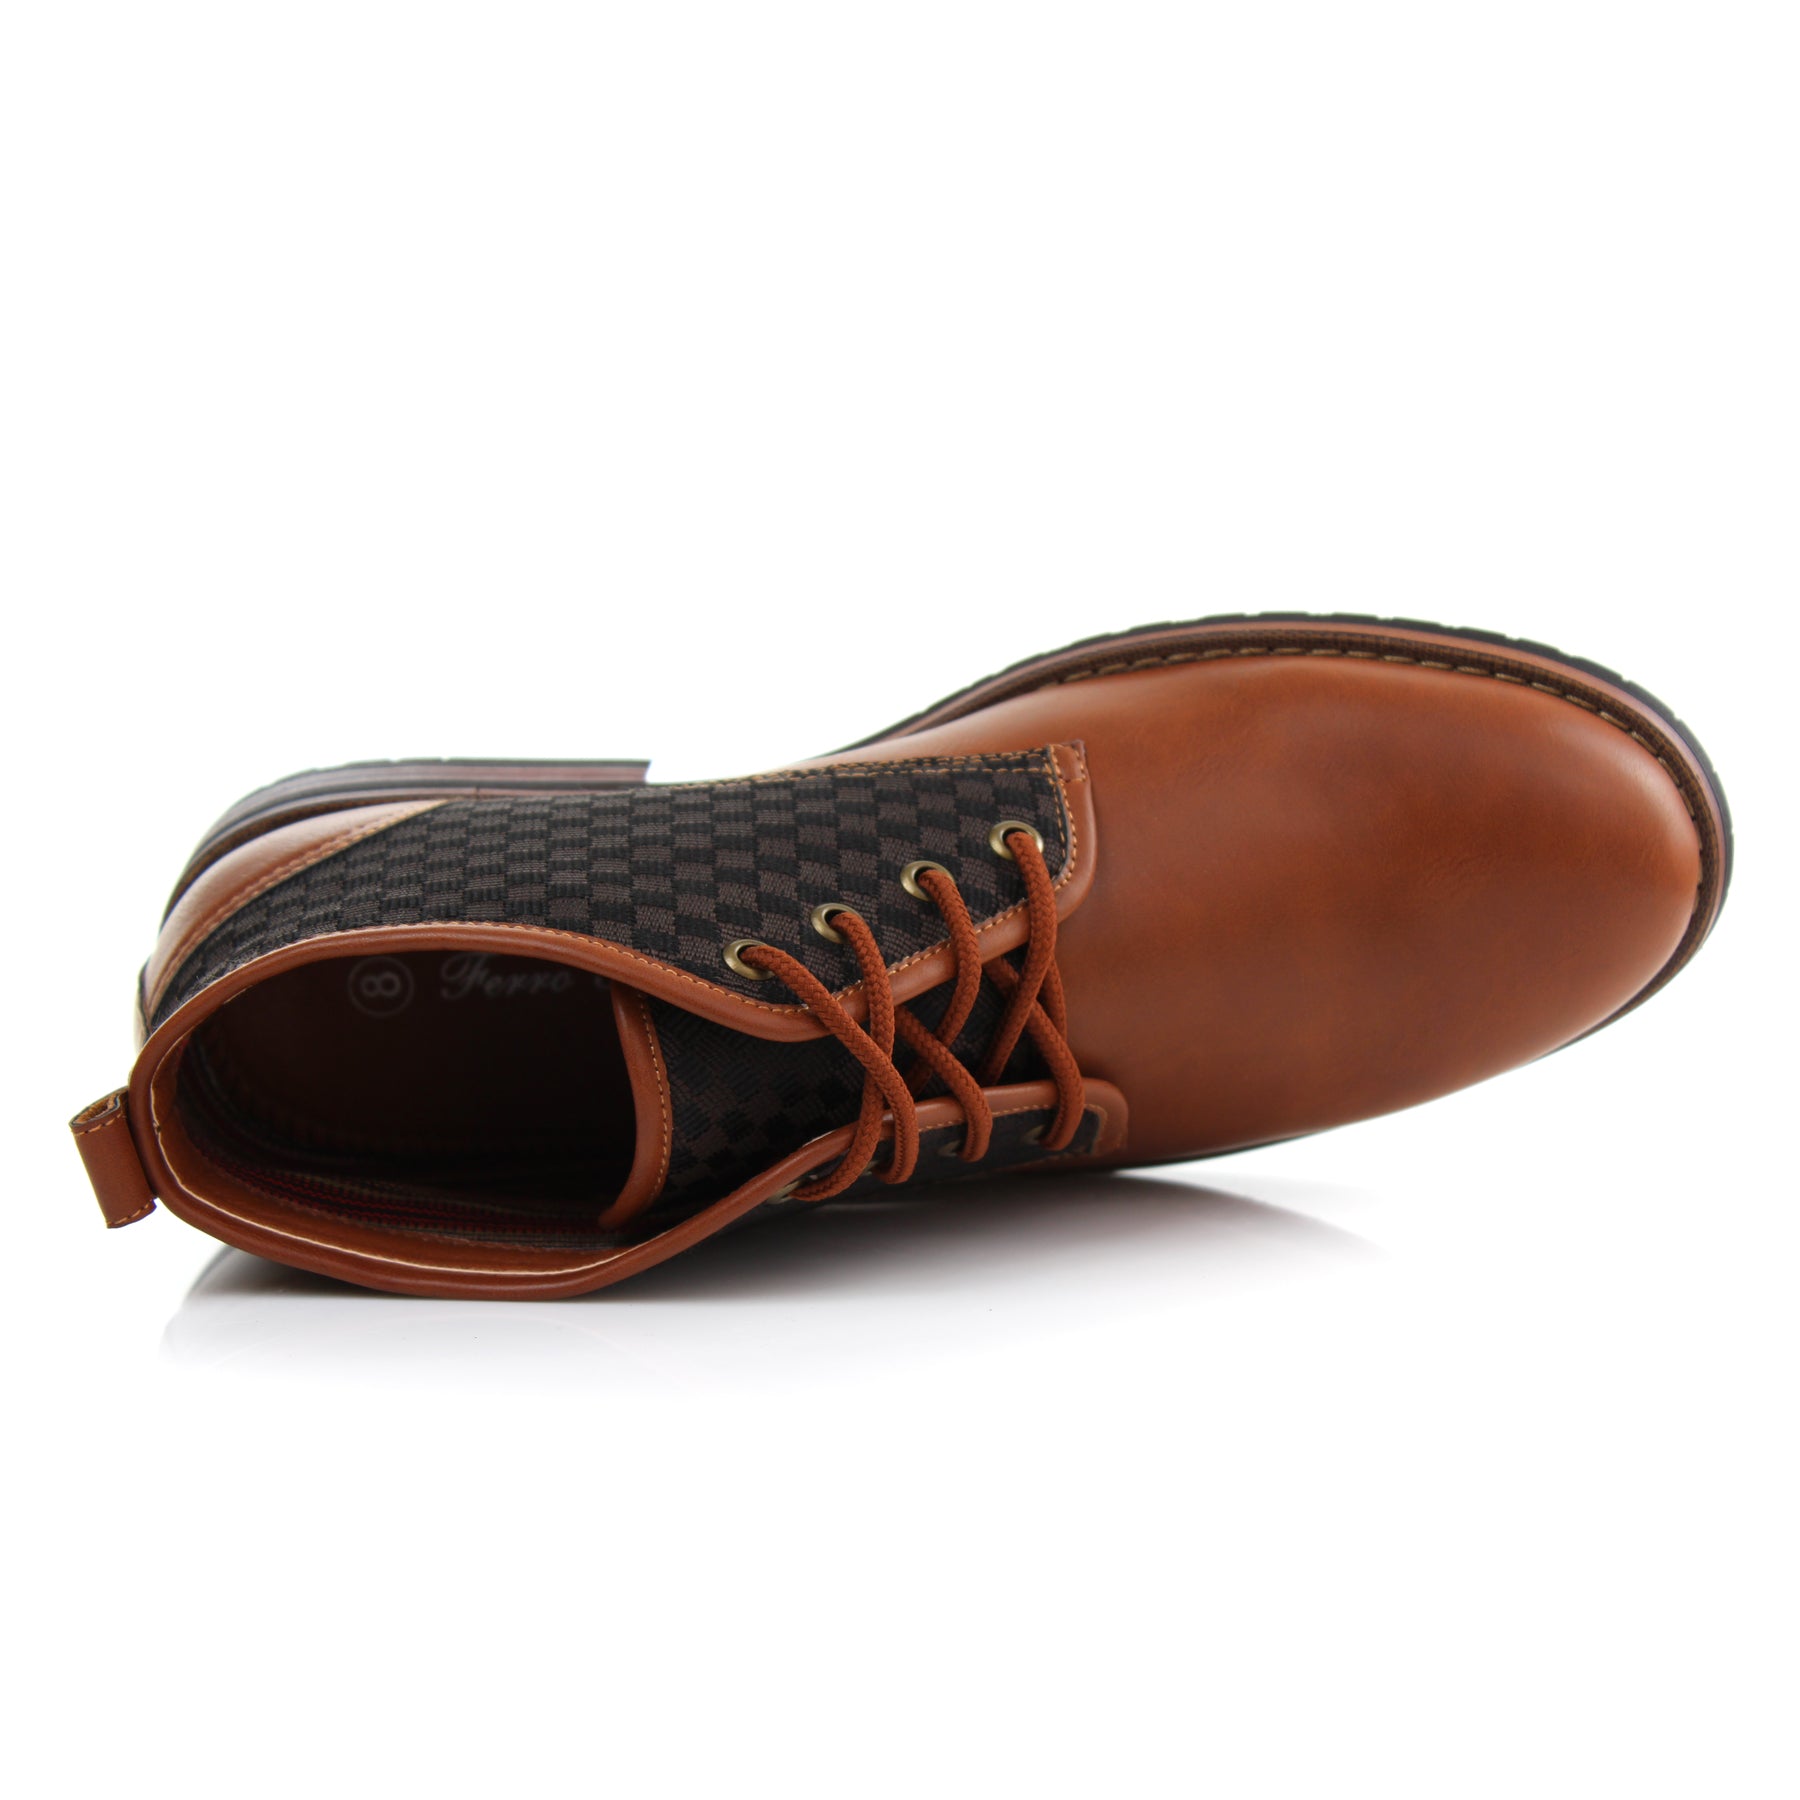 Plaid Contrast Chukka Boots | Ryan by Ferro Aldo | Conal Footwear | Top-Down Angle View